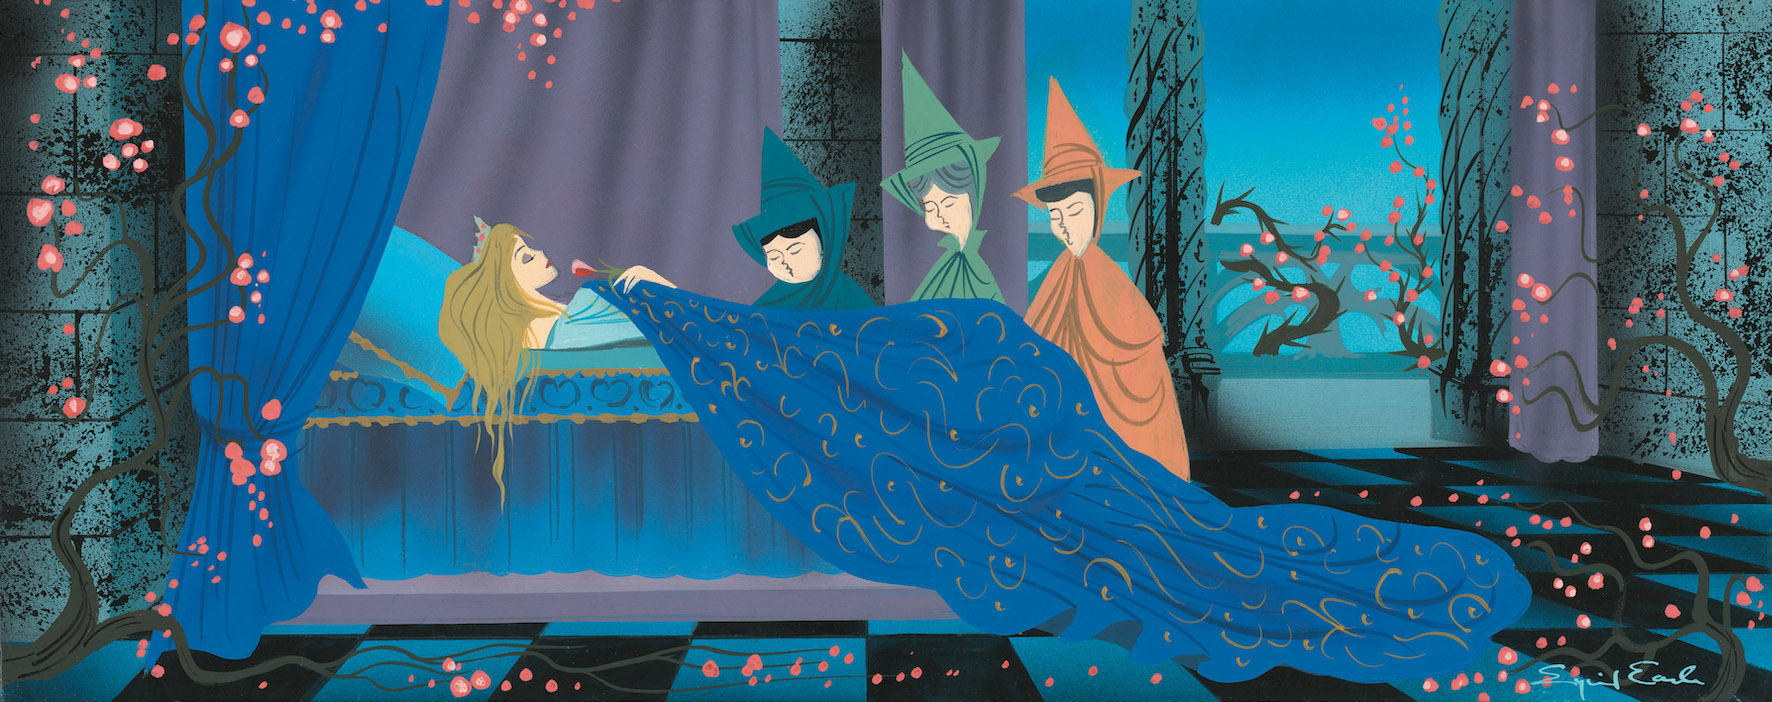 Sleeping Beauty, 1959 © Disney